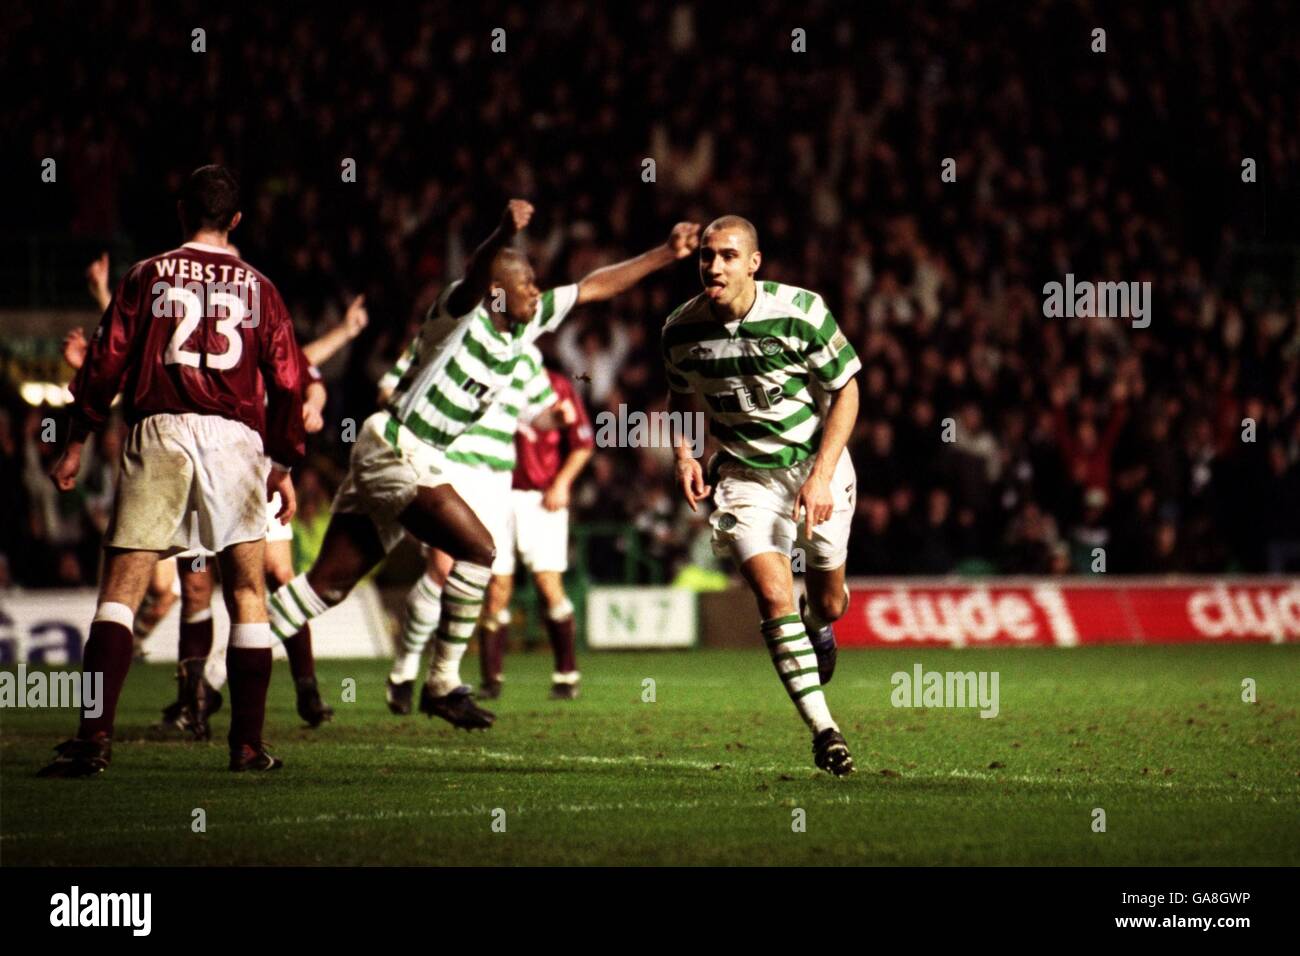 Soccer - Bank Of Scotland Premier League - Celtic v Heart Of Midlothian. Celtic's Henrik Larsson celebrates scoring the first goal against Hearts Stock Photo